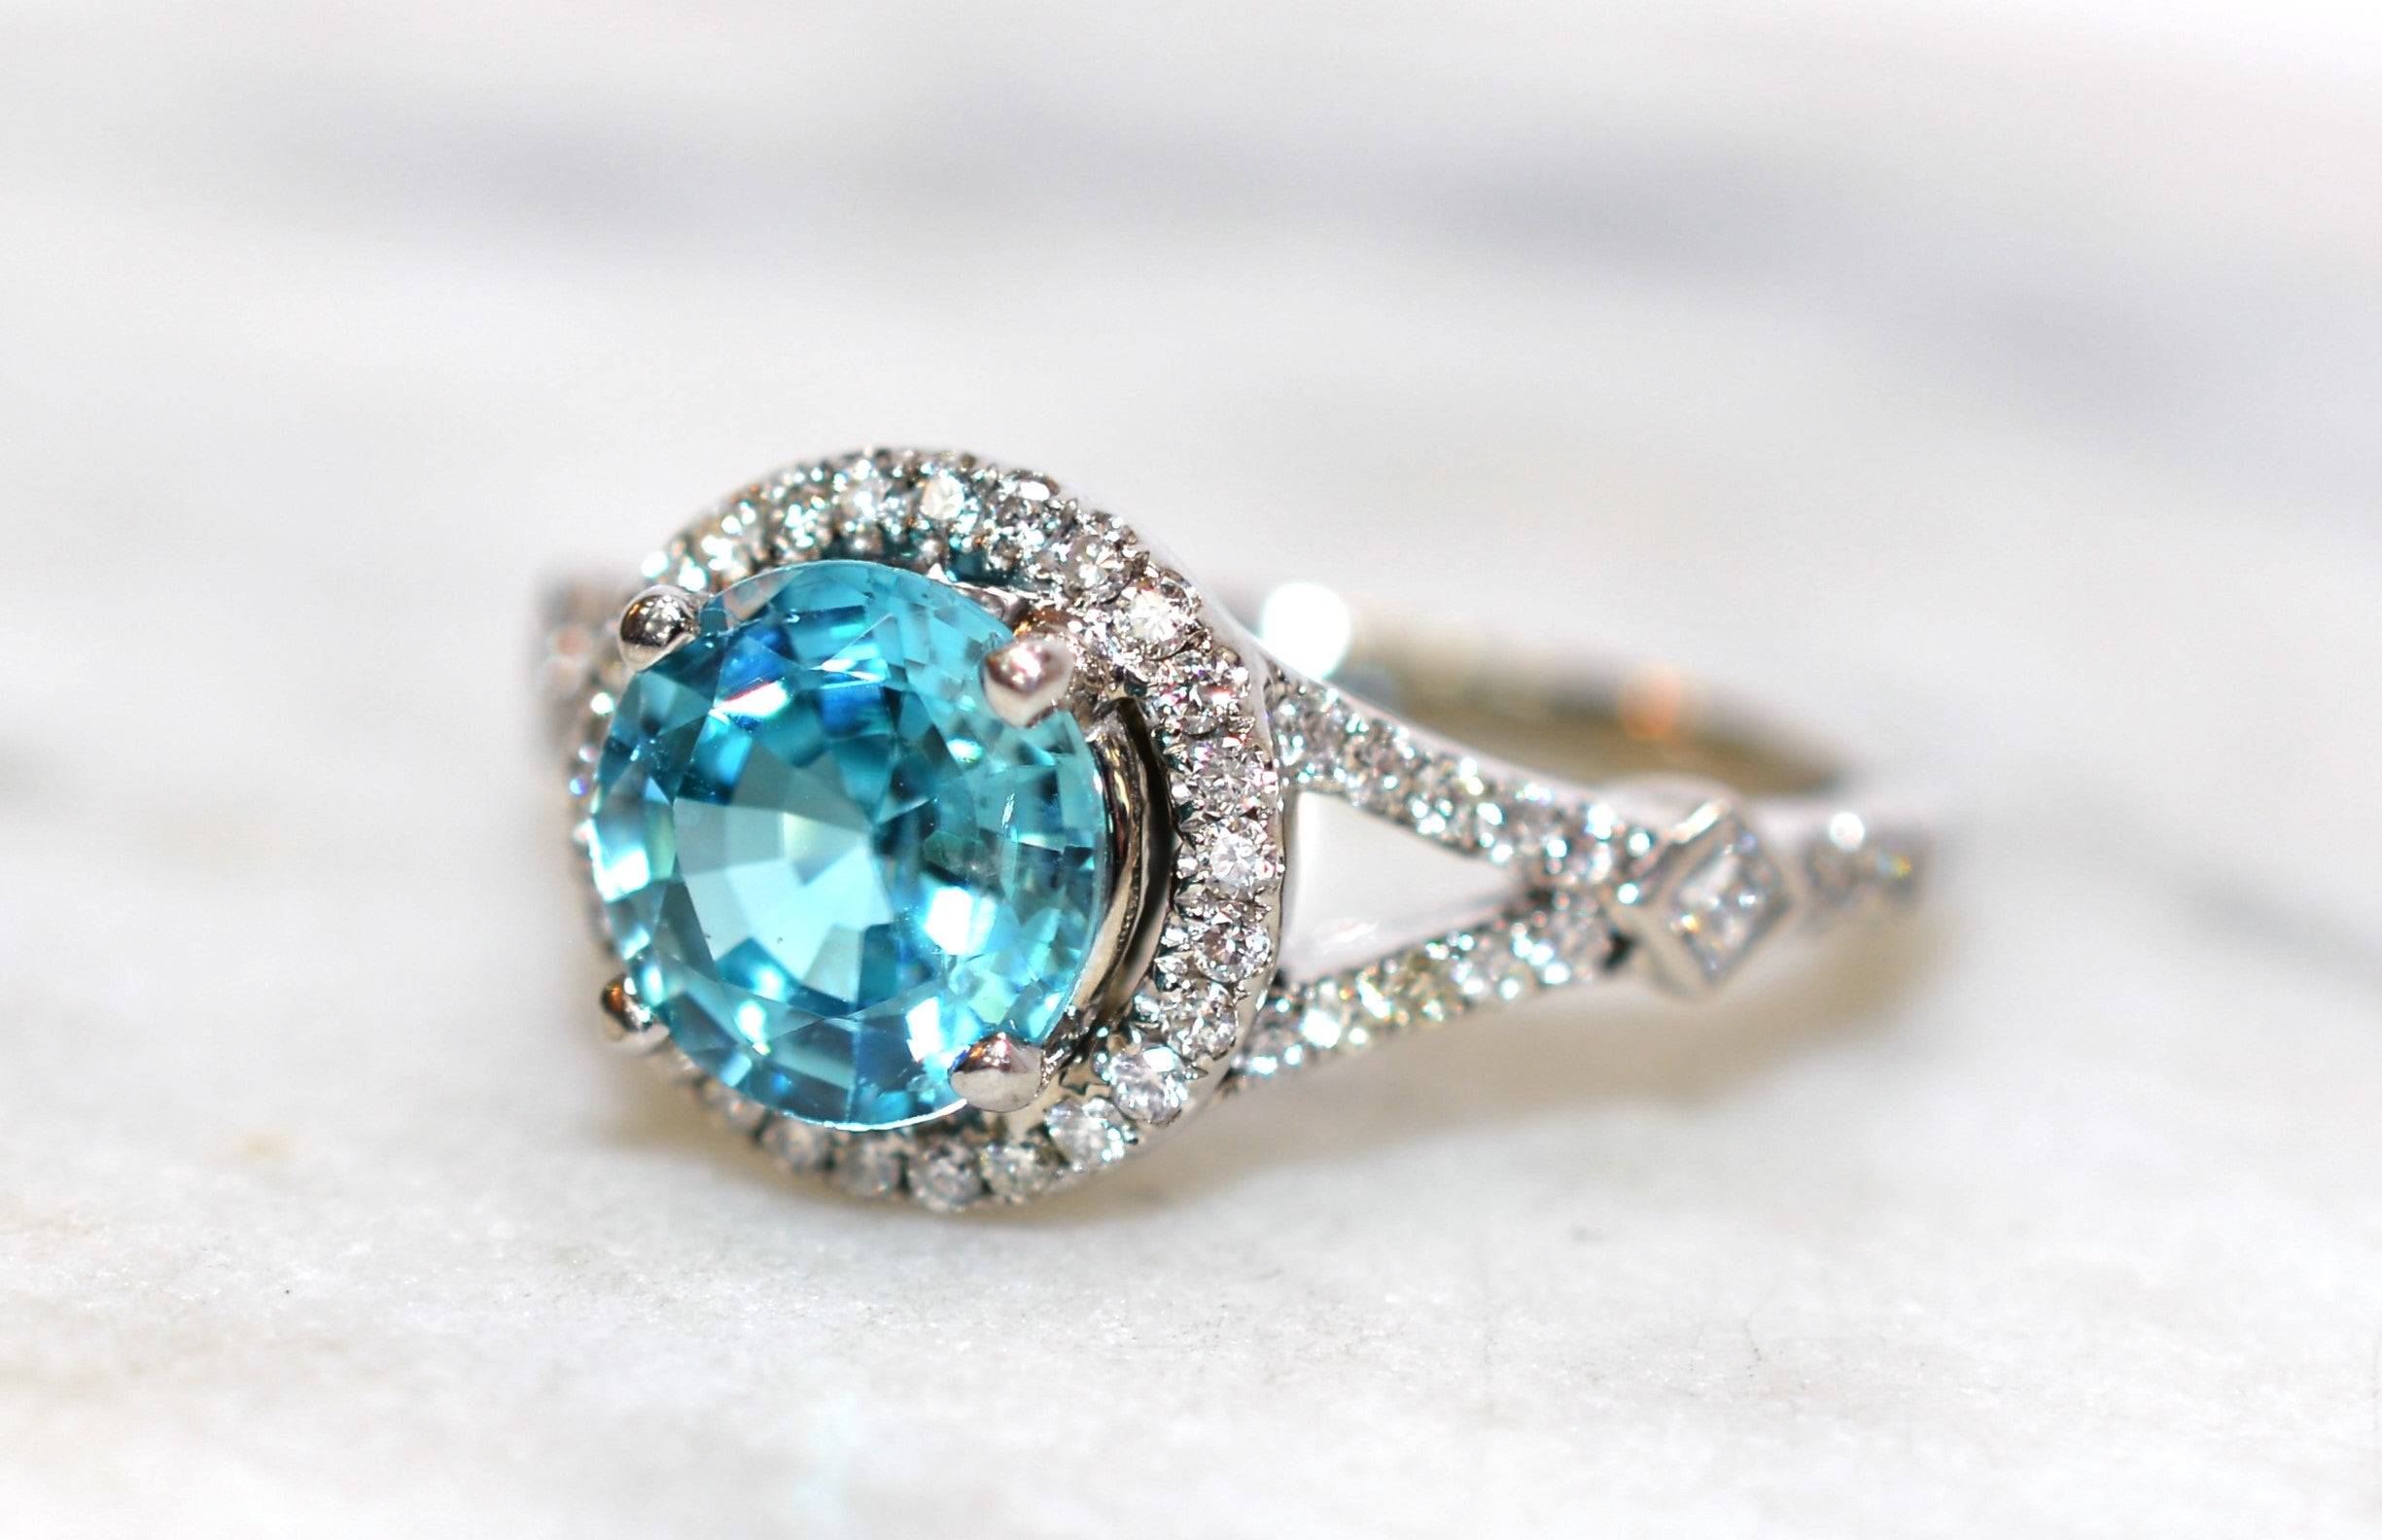 Natural Blue Zircon & Diamond Ring 14K Solid White Gold 2.12tcw Engagement Ring Wedding Ring Cocktail Ring Gemstone Ring Birthstone Ring